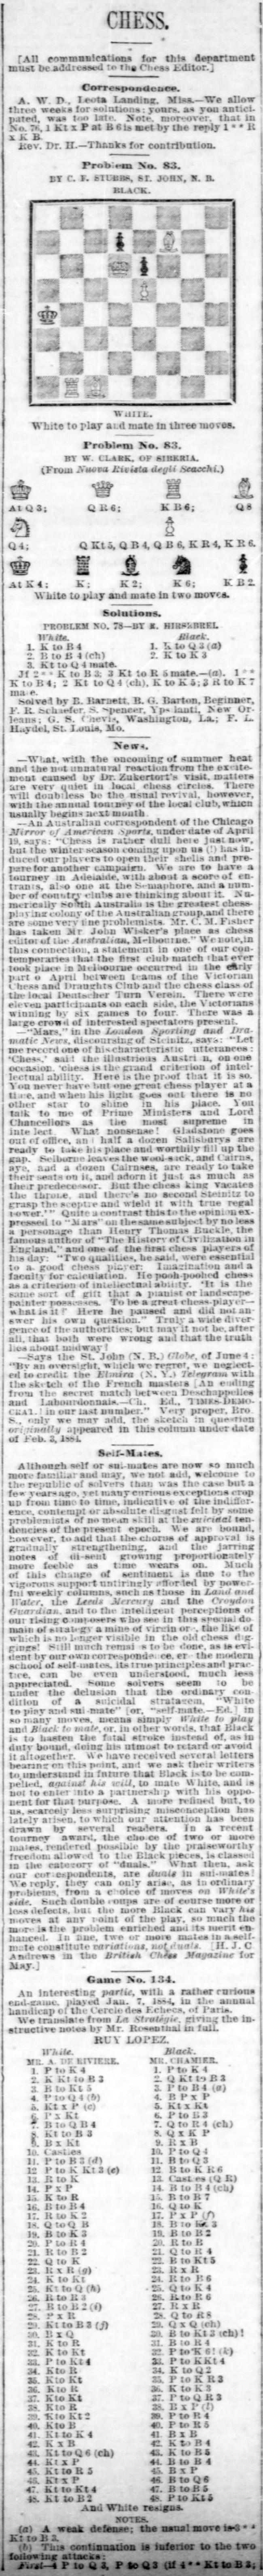 1884.06.15-01 New Orleans Times-Democrat.jpg